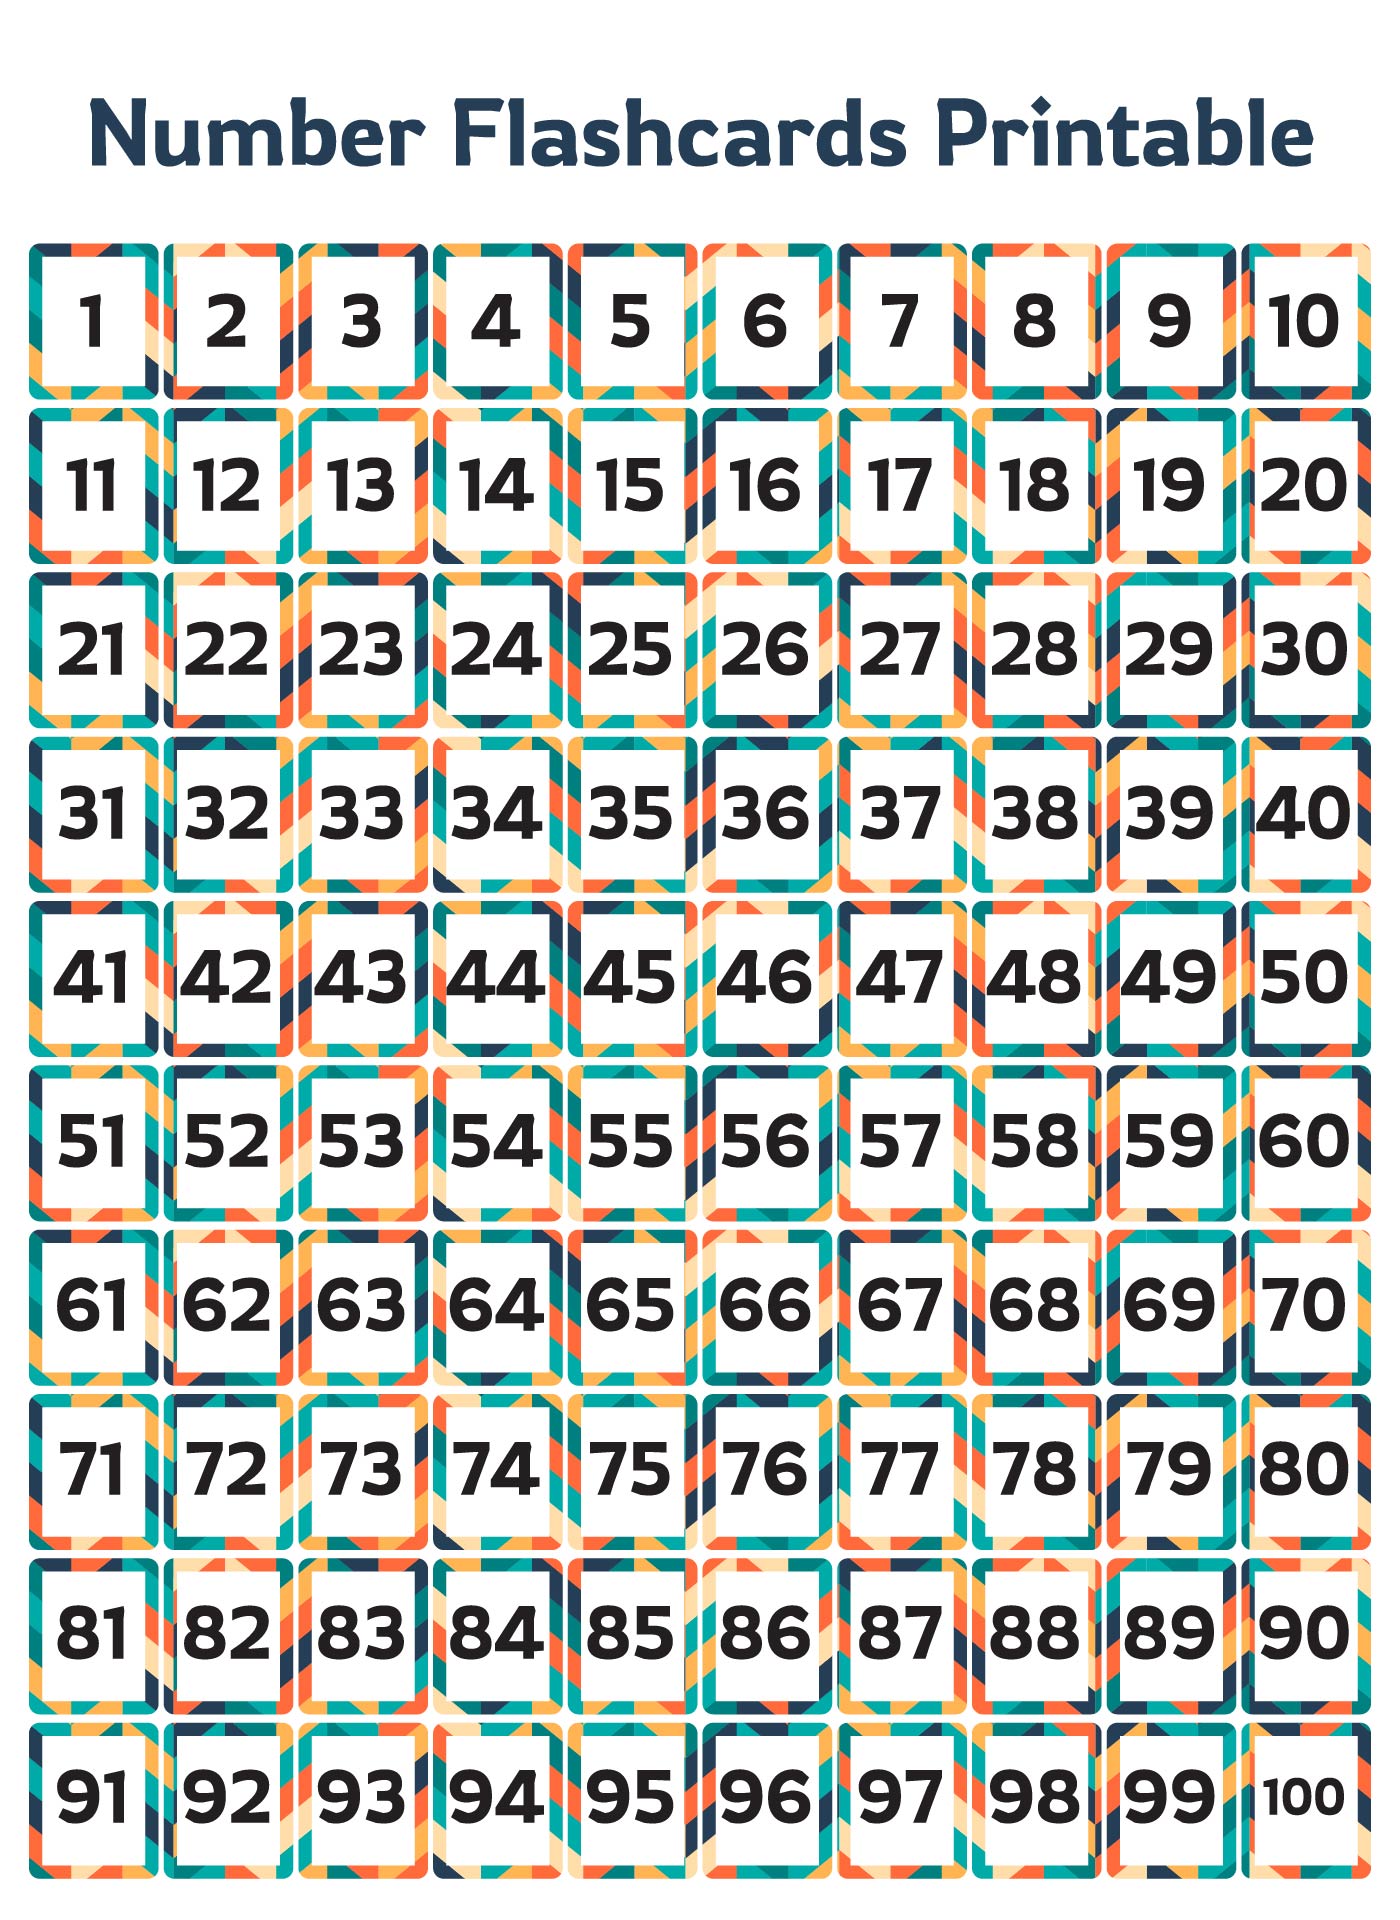 7 Best Images Of Number Flashcards 1 100 Printable Printable Number